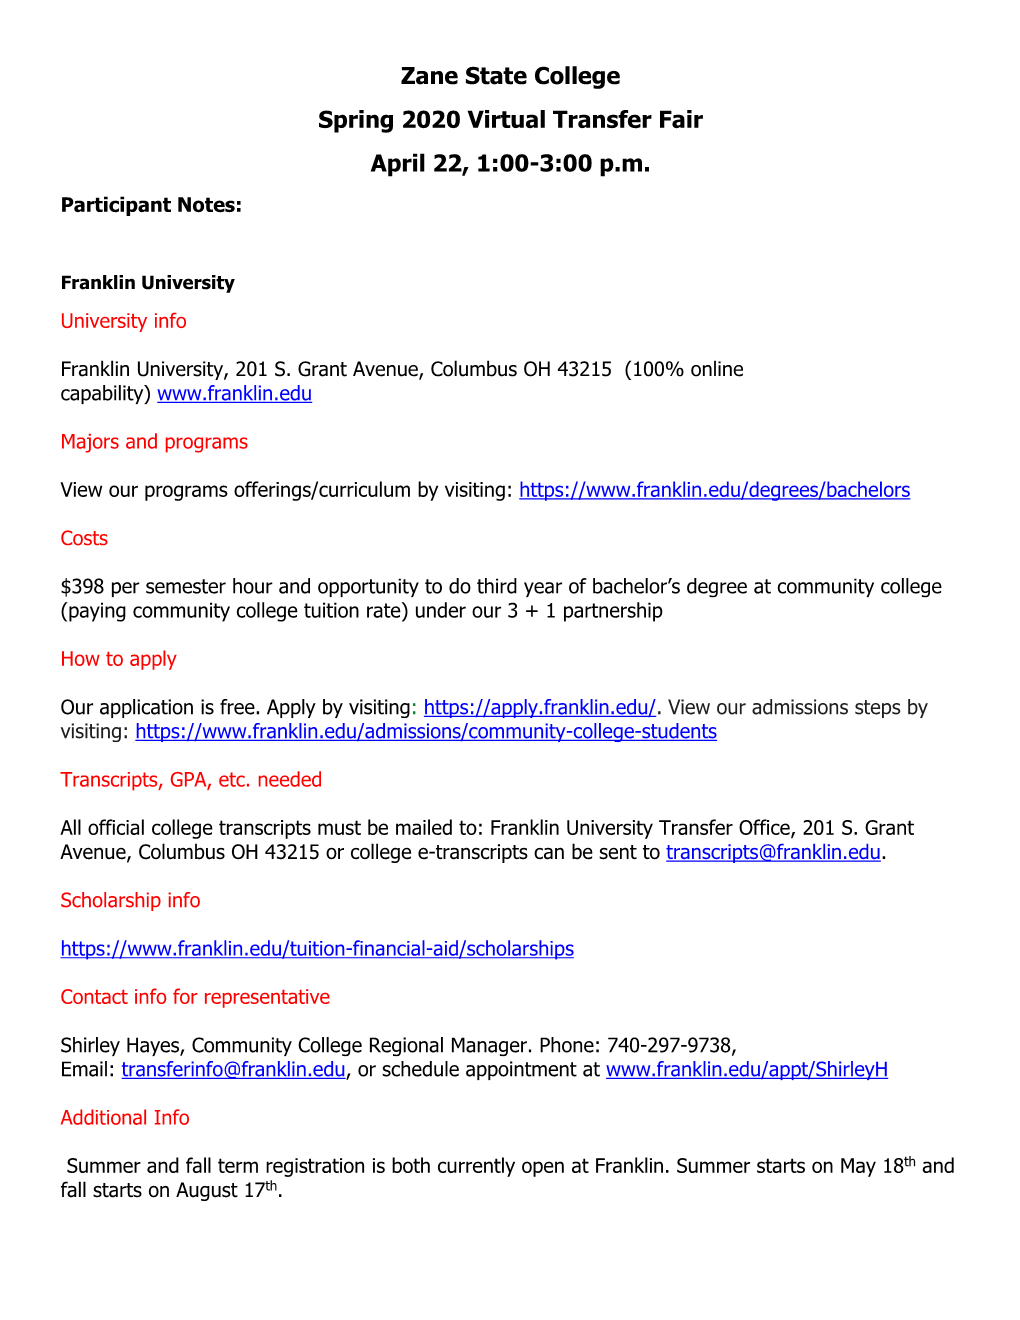 Zane State College Spring 2020 Virtual Transfer Fair April 22, 1:00-3:00 P.M